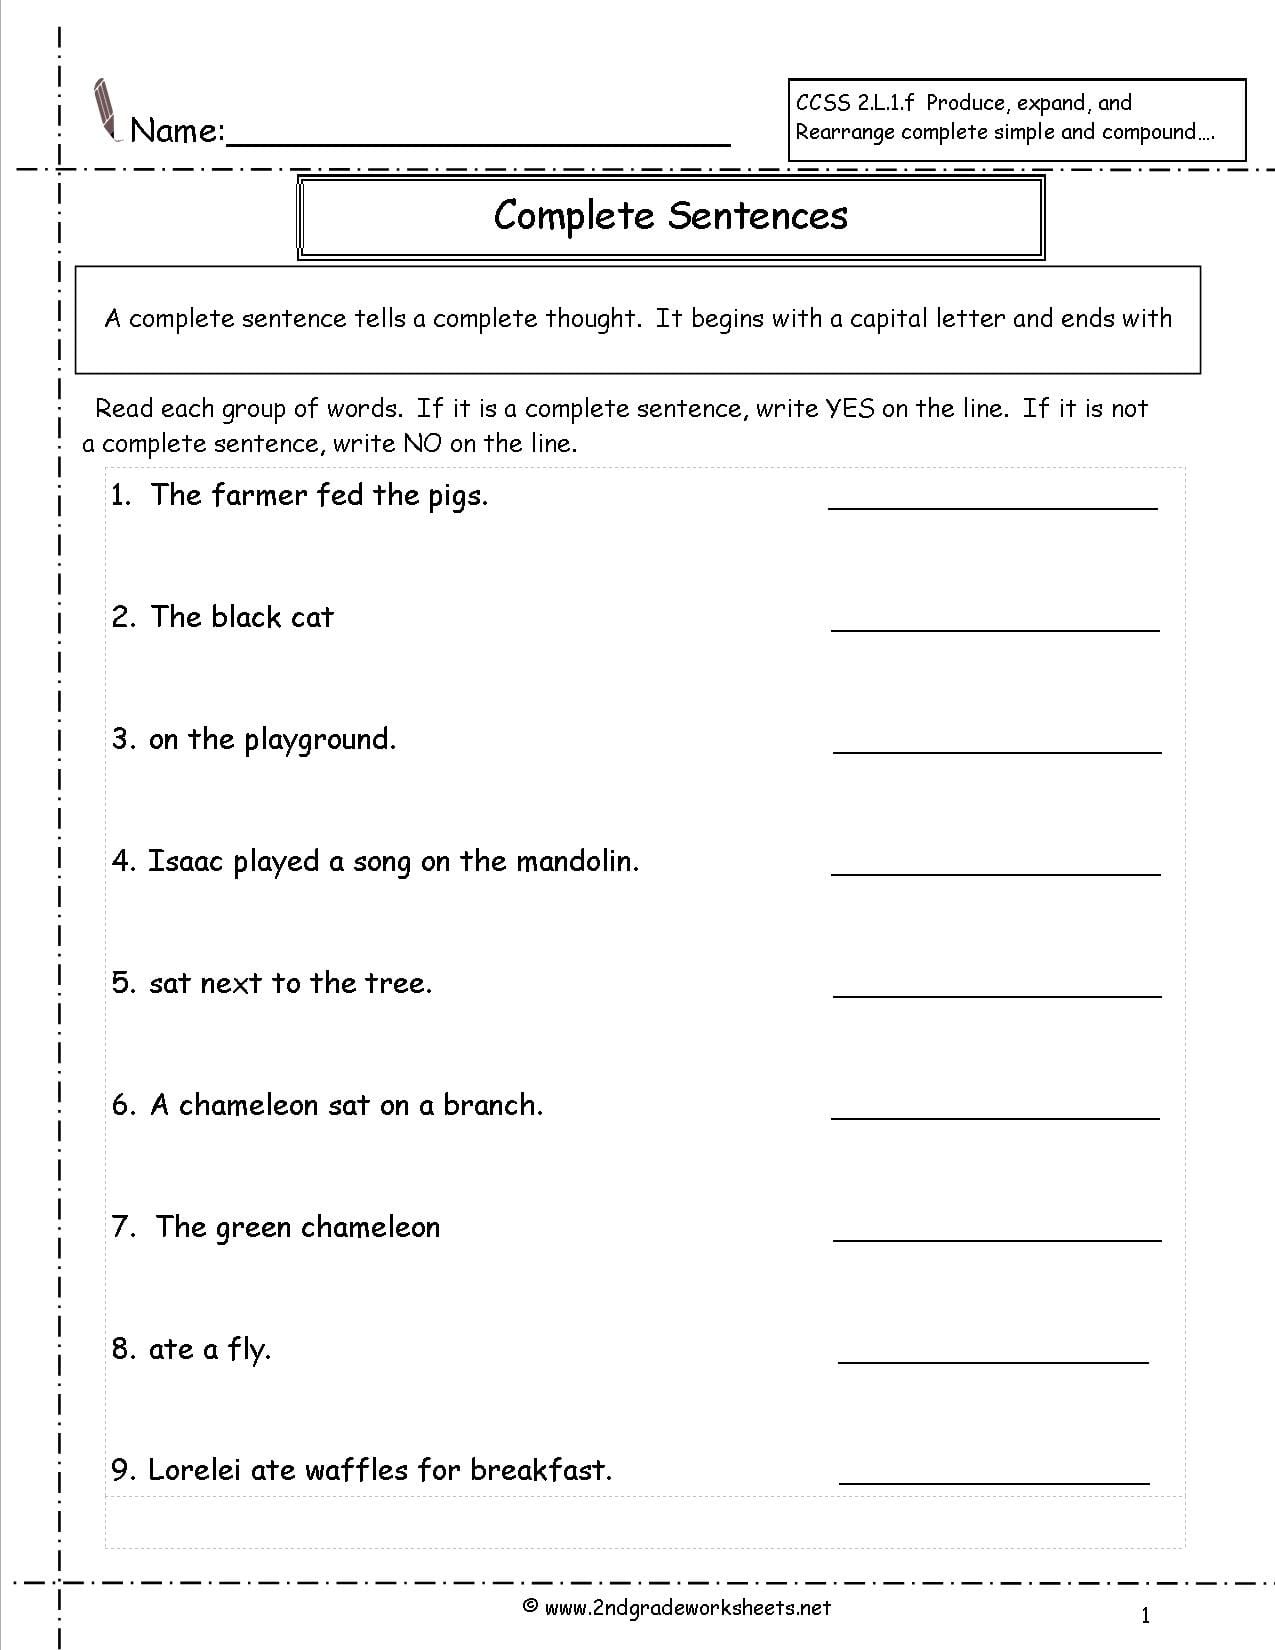 sentence-structure-english-esl-worksheets-sentence-structure-word-order-teaching-sentences